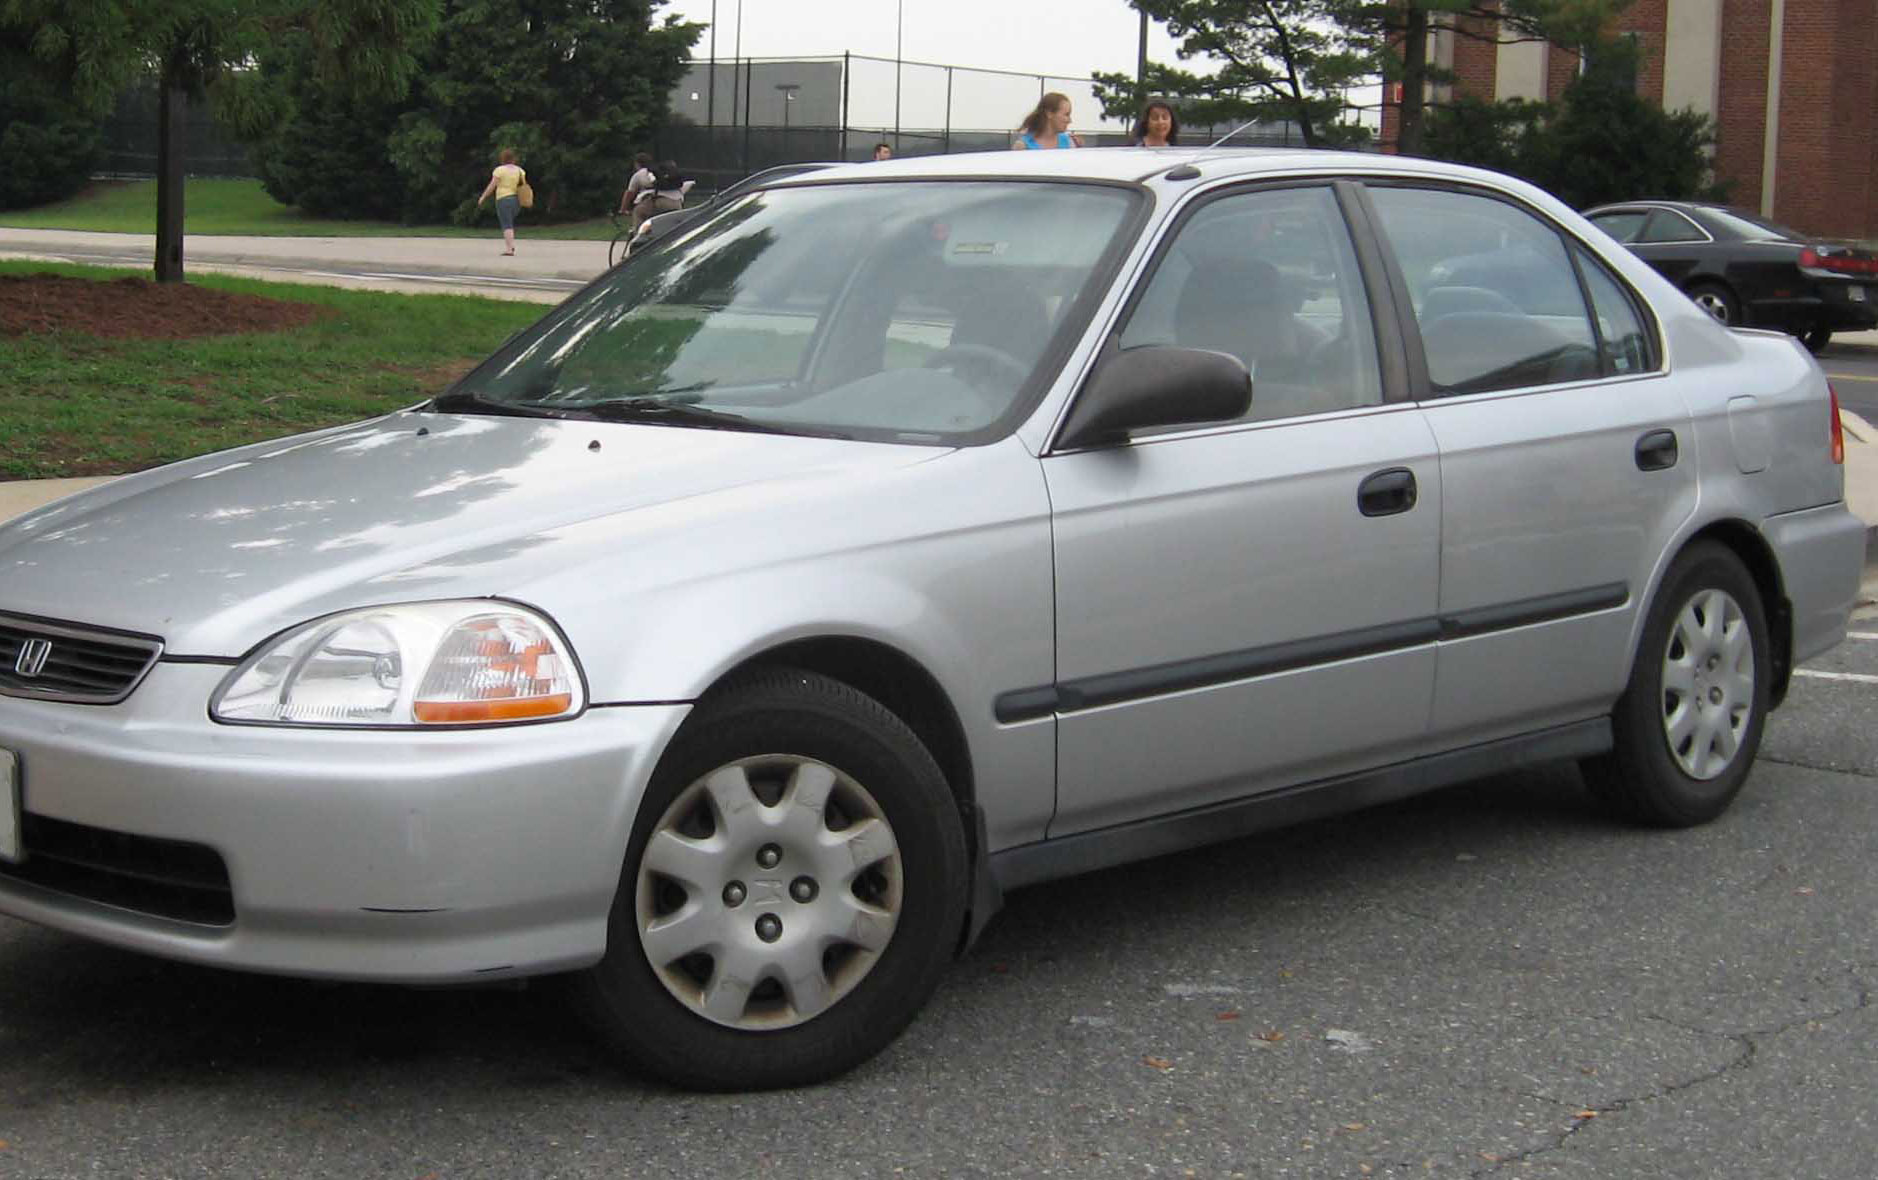 A Honda Civic circa 1996-1998 is seen in the U.S. (Courtesy IFCAR via Wikimedia Commons)